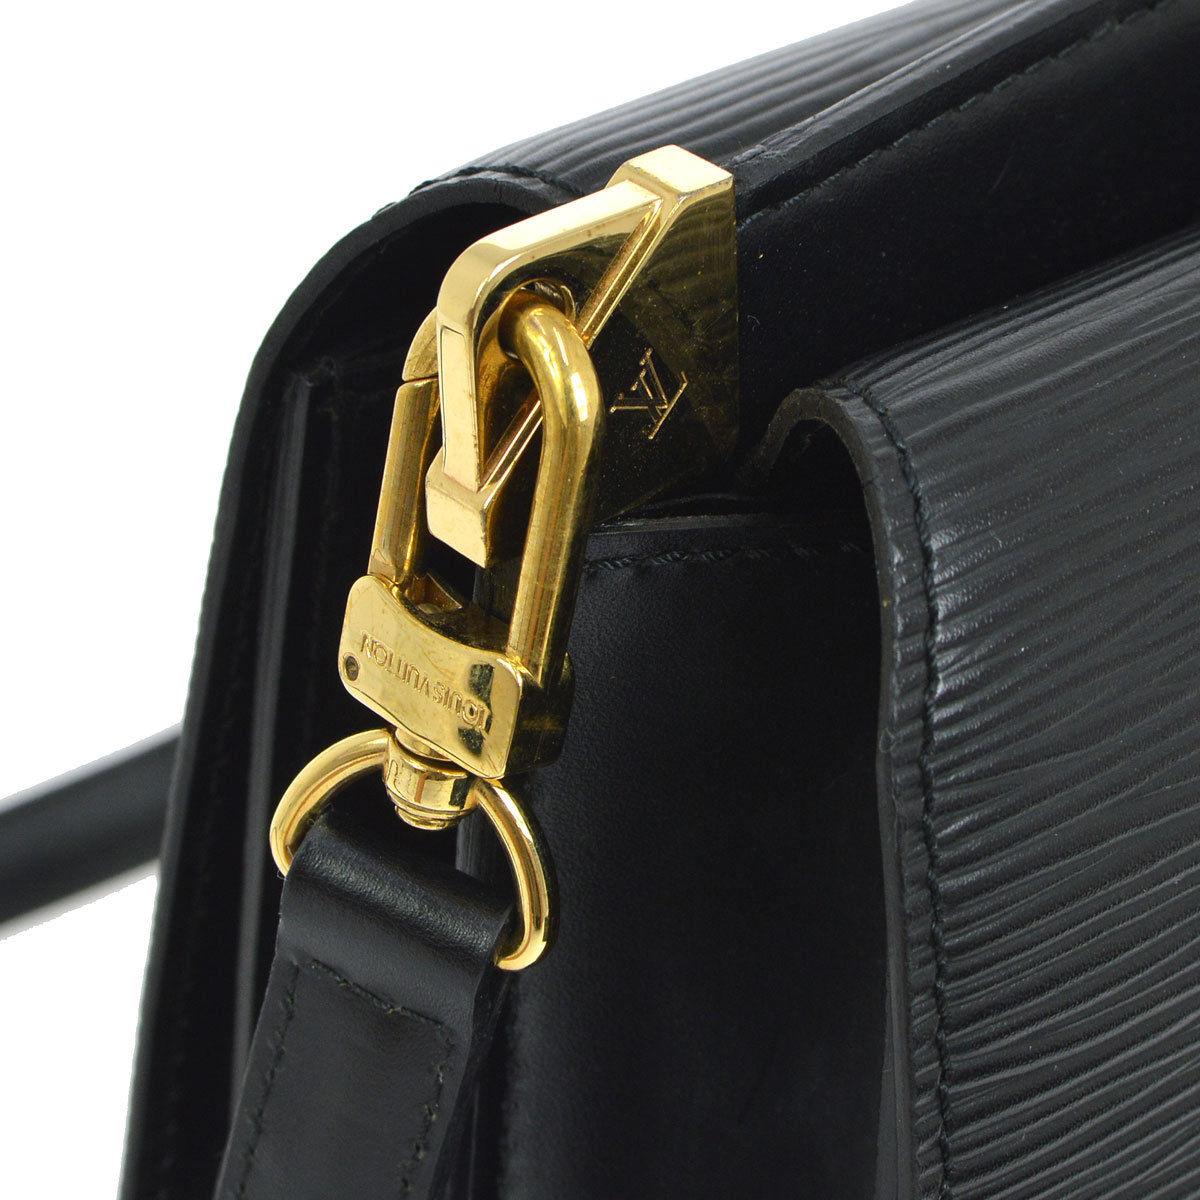 Louis Vuitton Black Leather Gold Saddle 2in1 Clutch Crossbody Shoulder Flap Bag

Epi
Gold tone hardware
Leather lining
Date code present
Made in France
Adjustable and removable shoulder trap drop 18-21.5